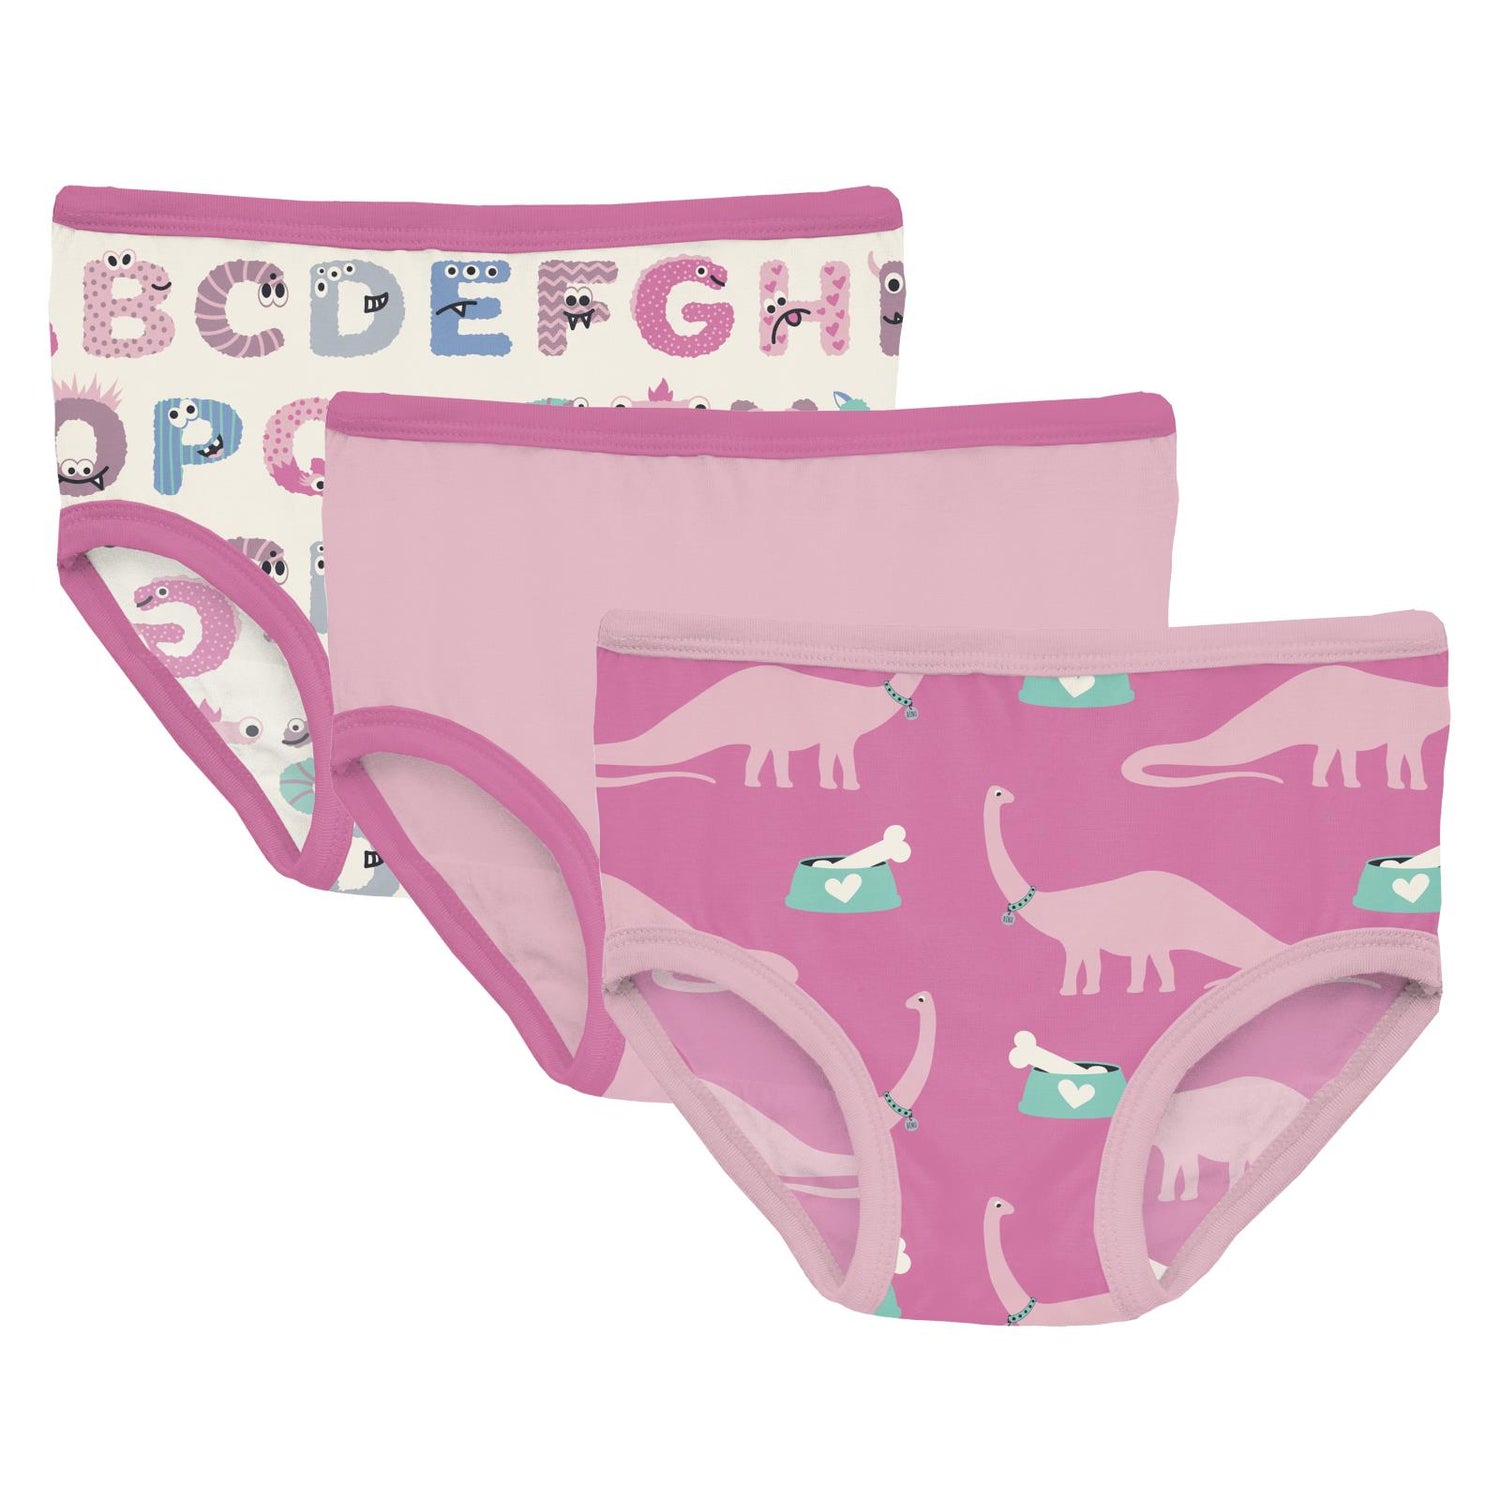 Print Girl's Underwear Set of 3 in Natural ABC Monsters, Cake Pop & Tulip Pet Dino